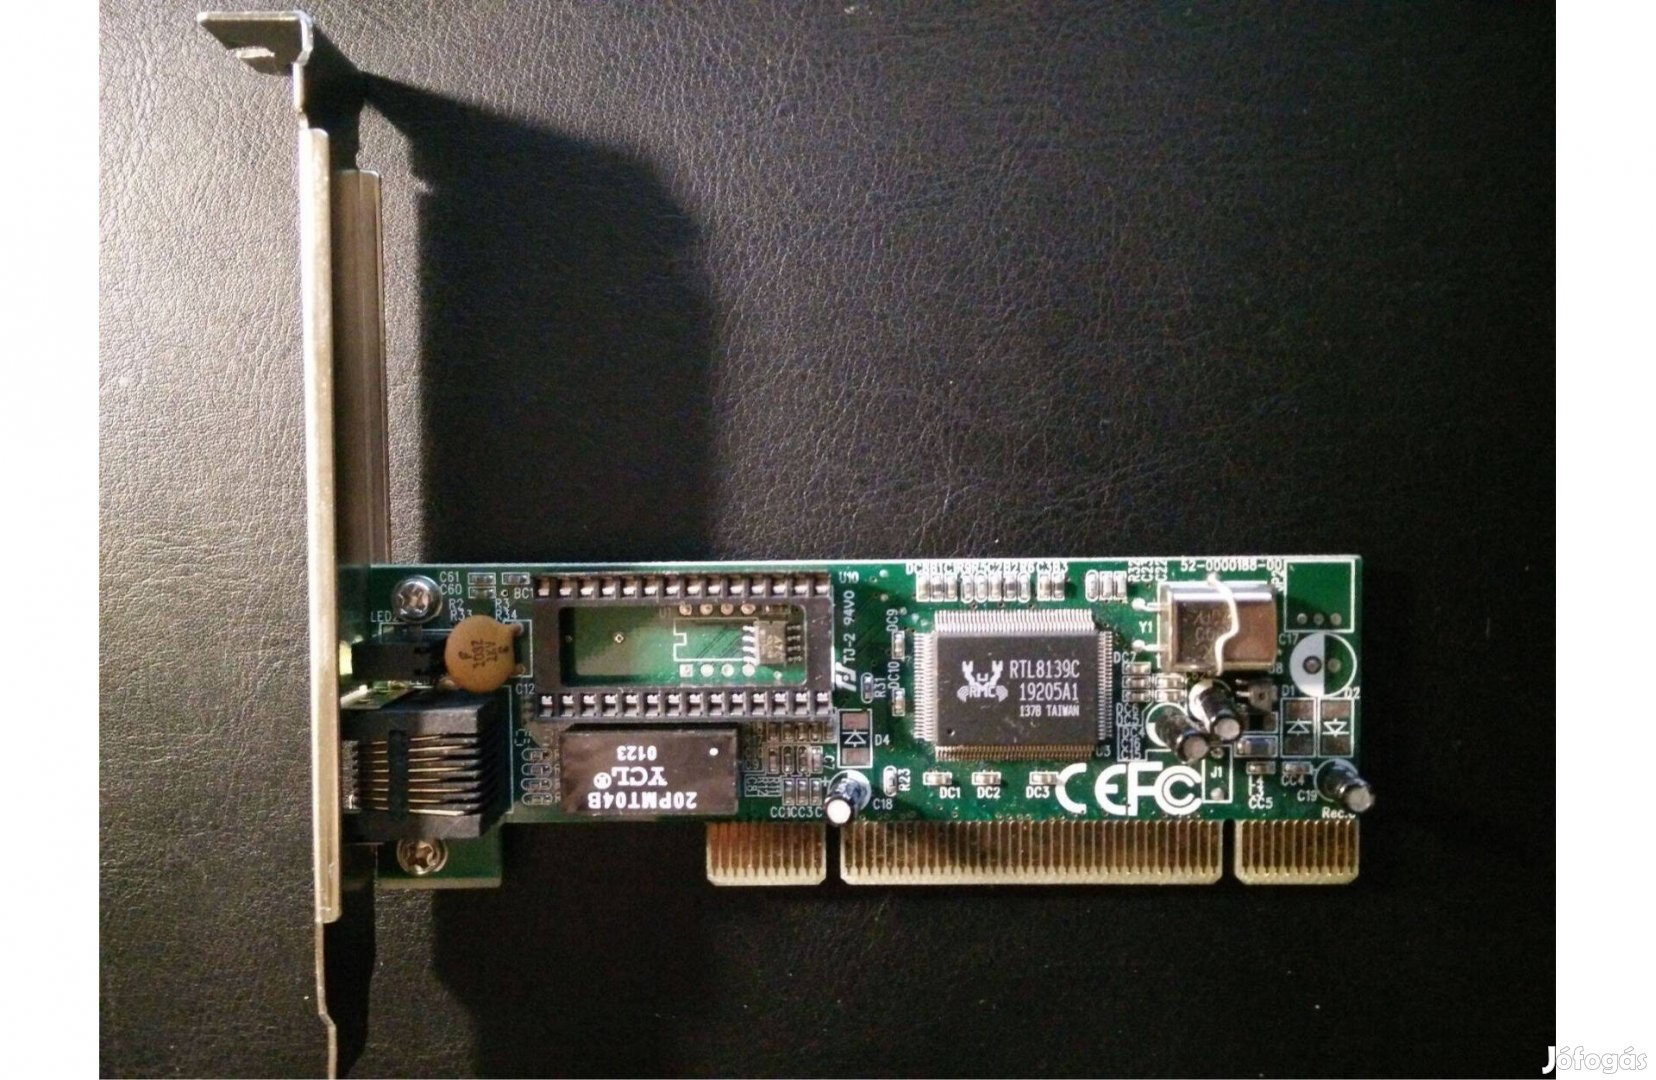 Realtek RTL8139C retro PCI Fast Ethernet kártya